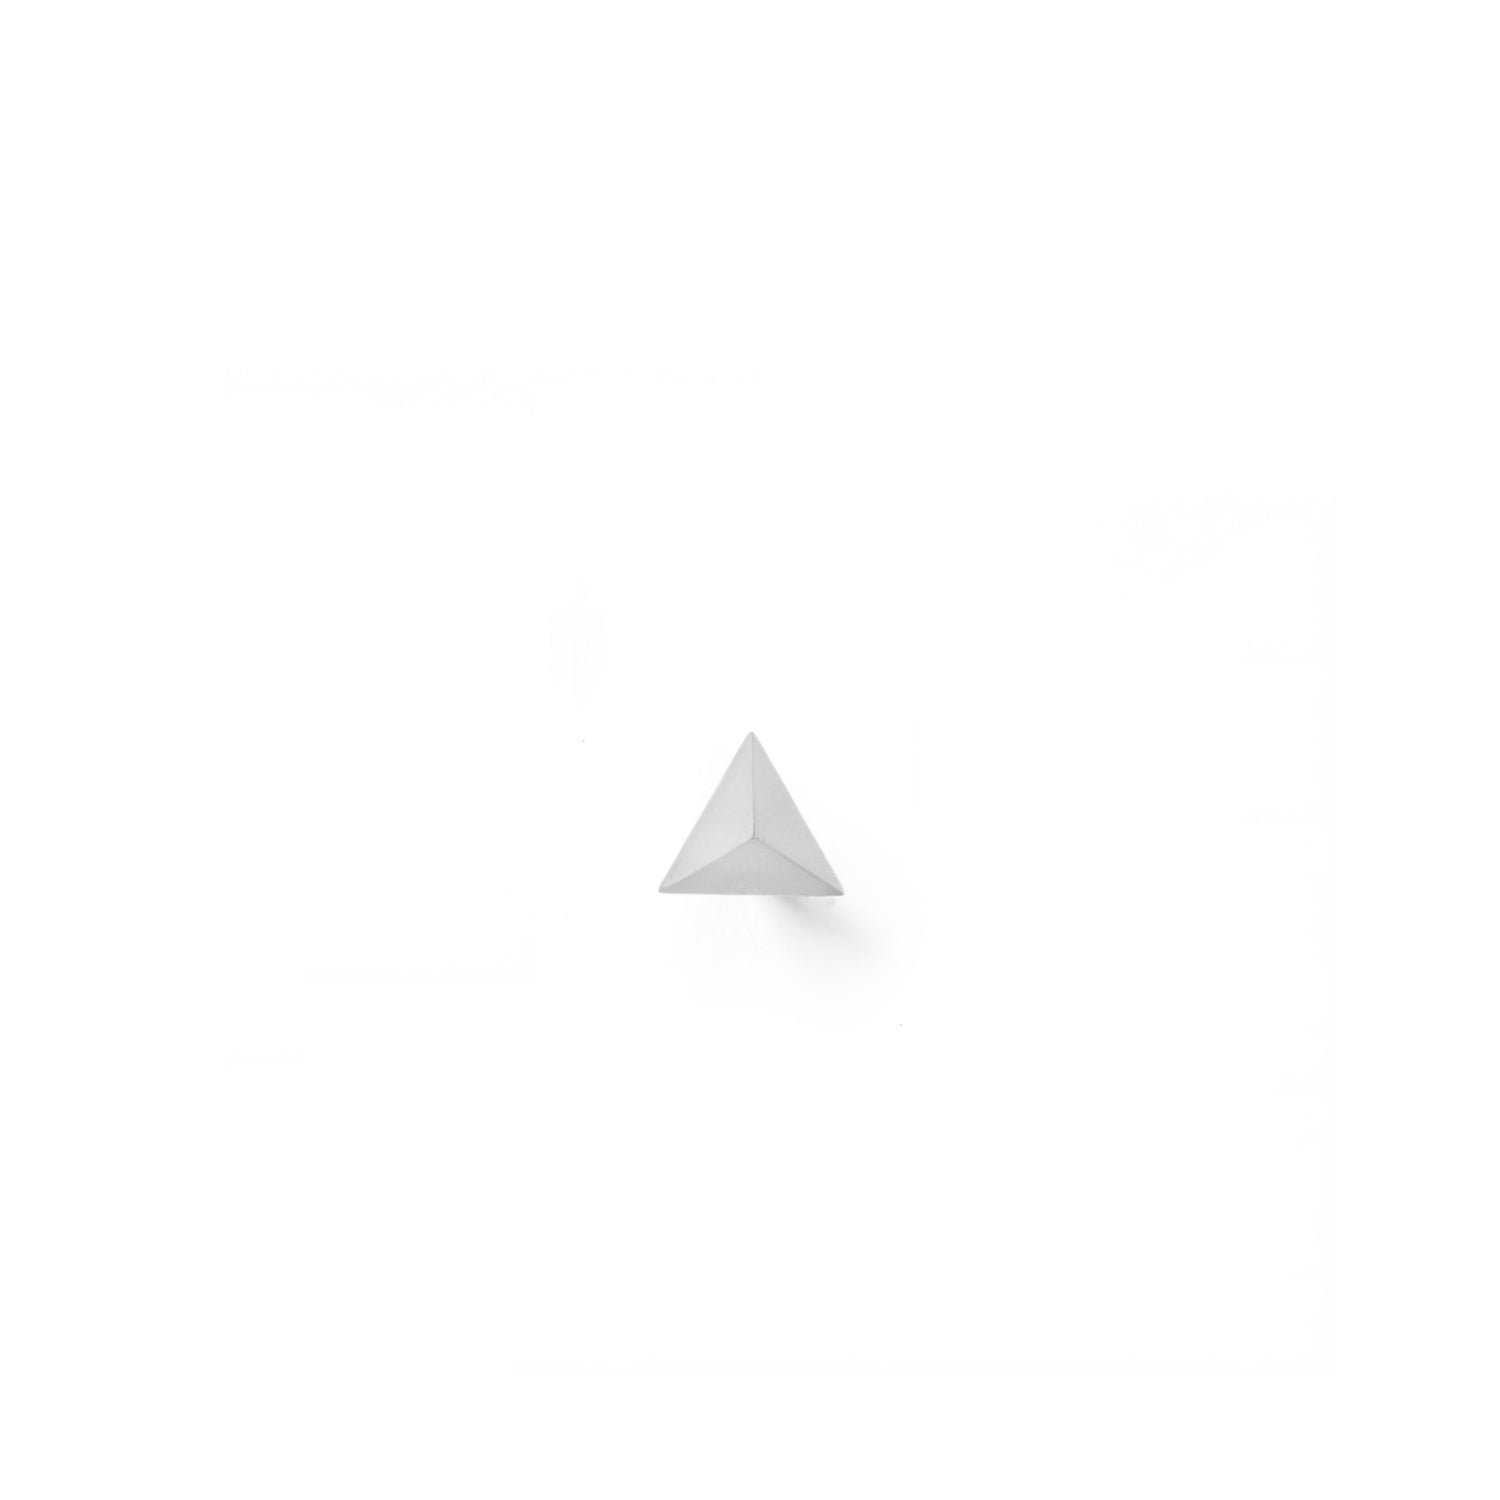 Single Tetrahedron Stud Earring - Silver